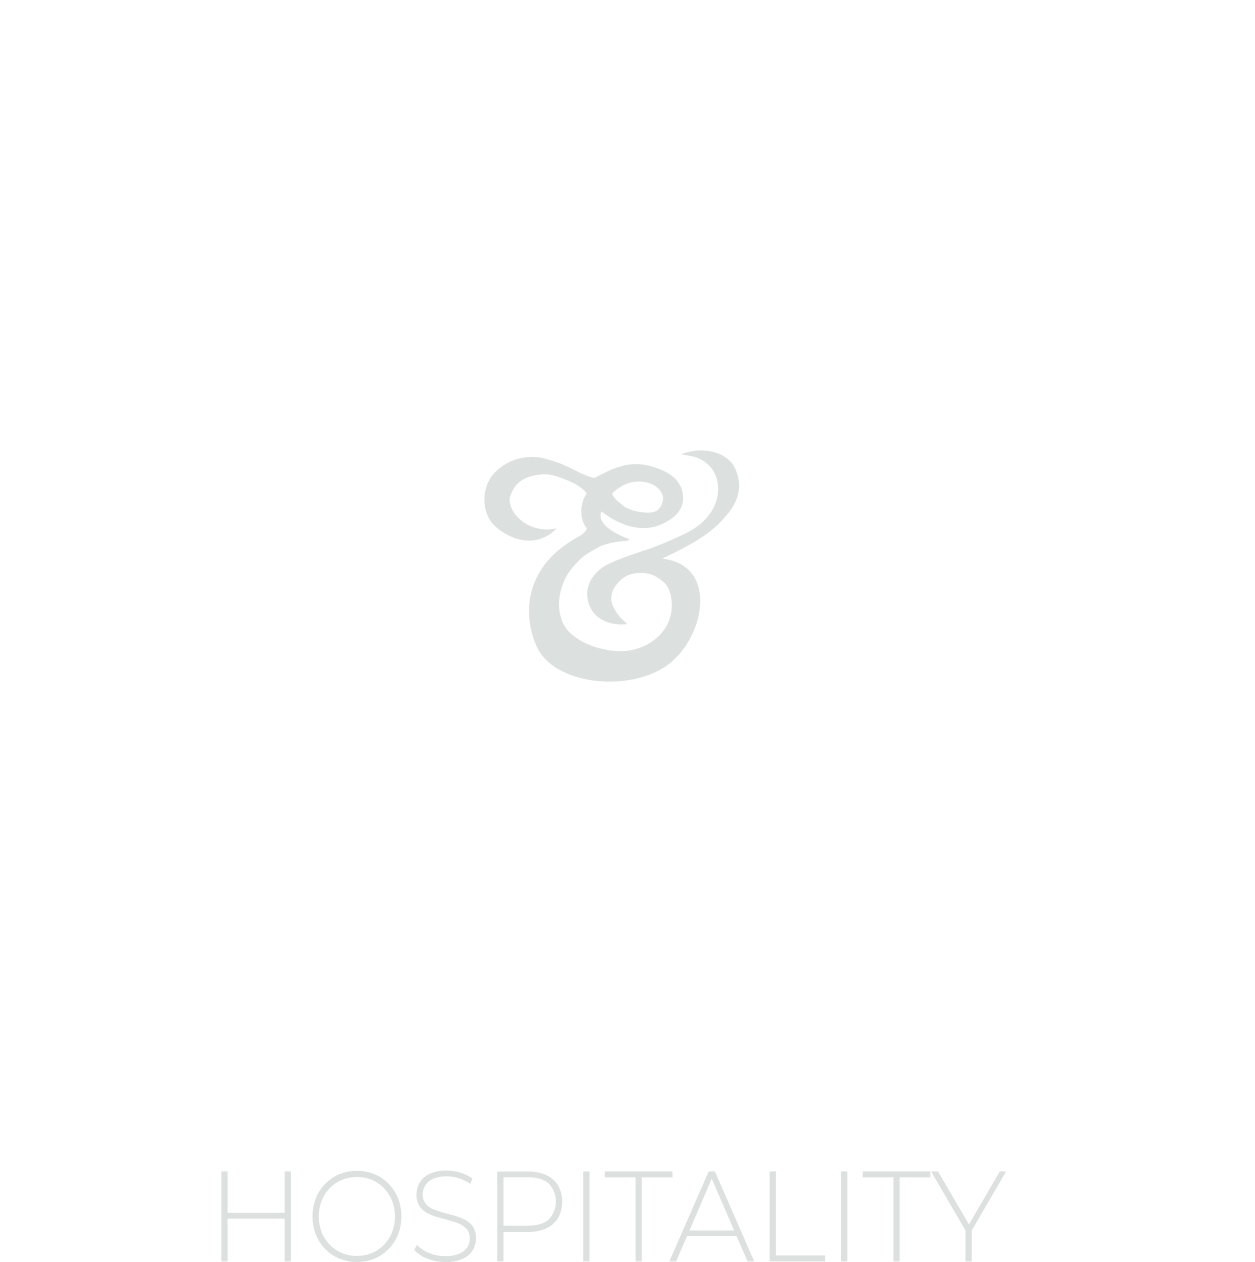 craft and crew logo white